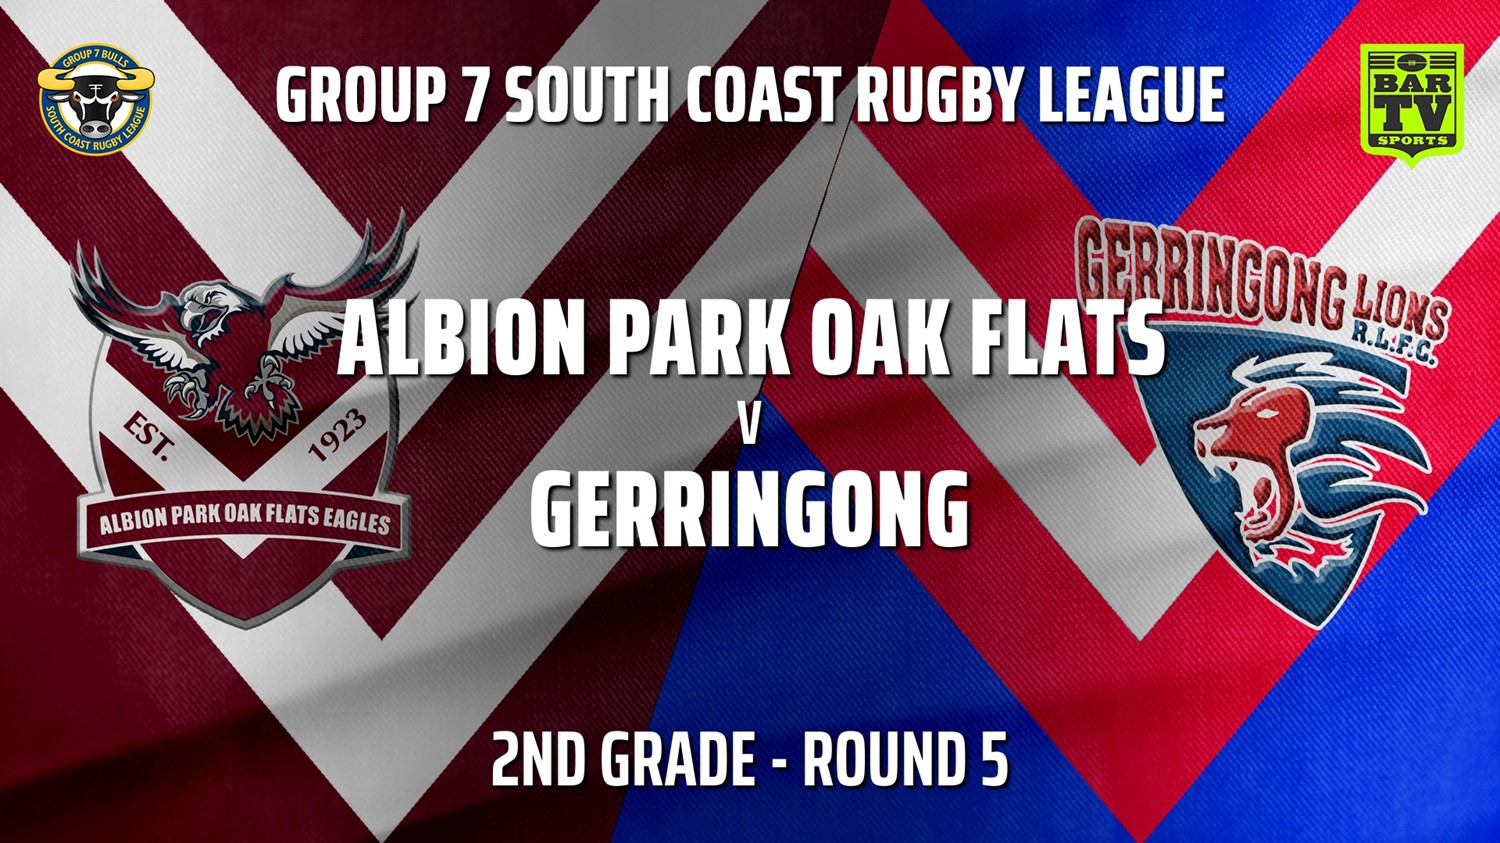 210515-Group 7 RL Round 5 - 2nd Grade - Albion Park Oak Flats v Gerringong Slate Image